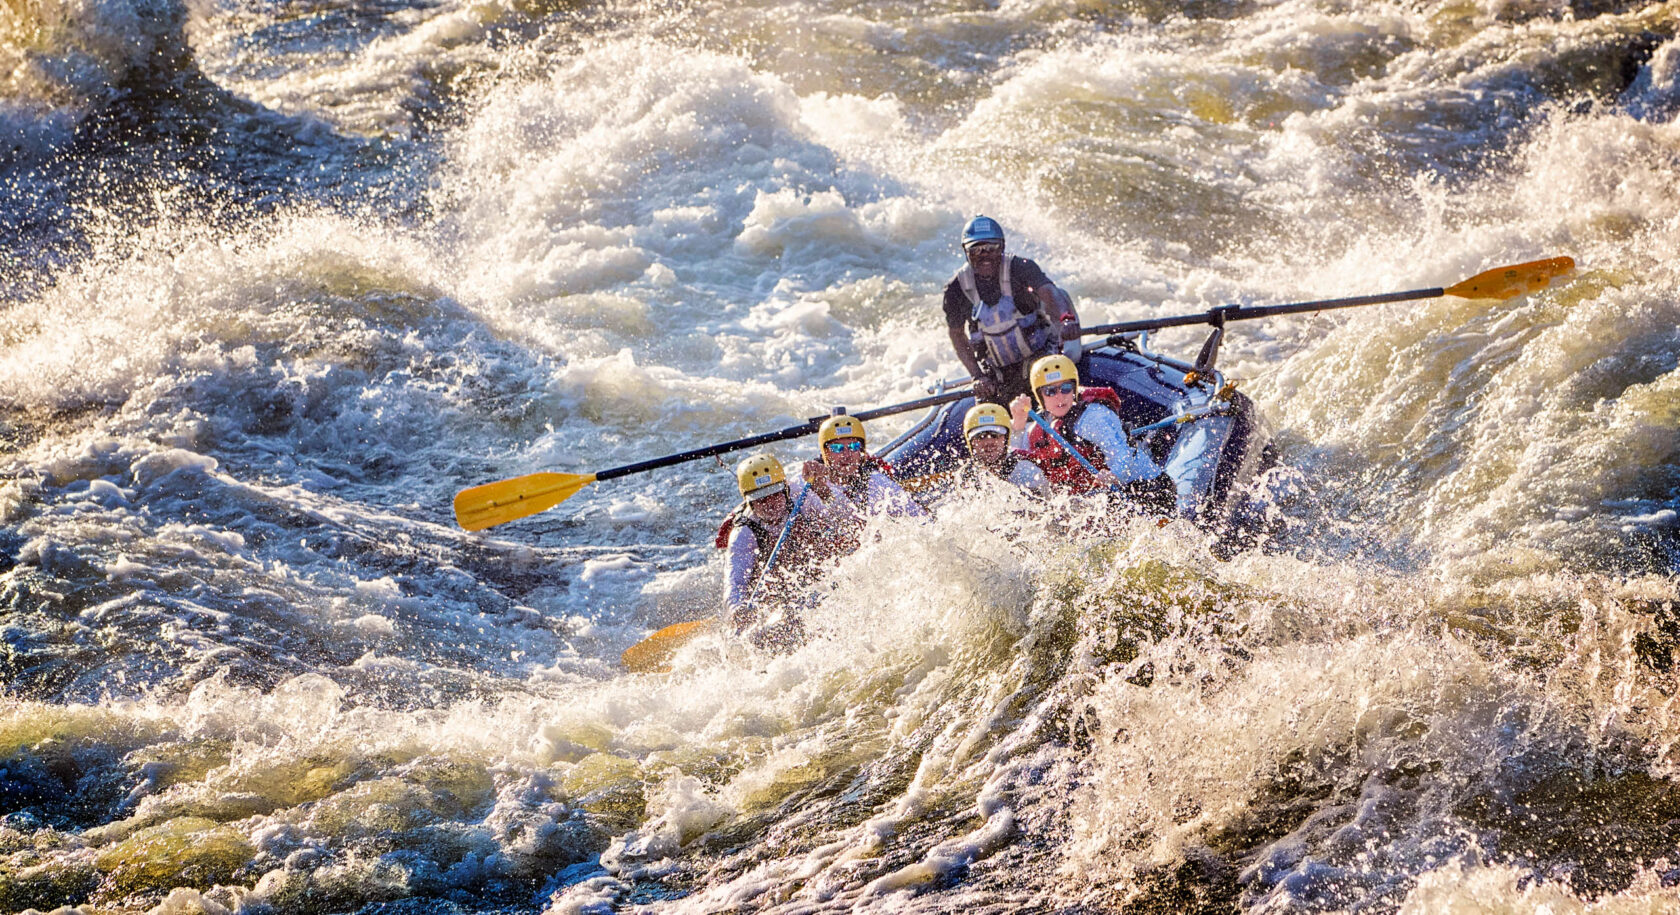 Group rafting through rapids.